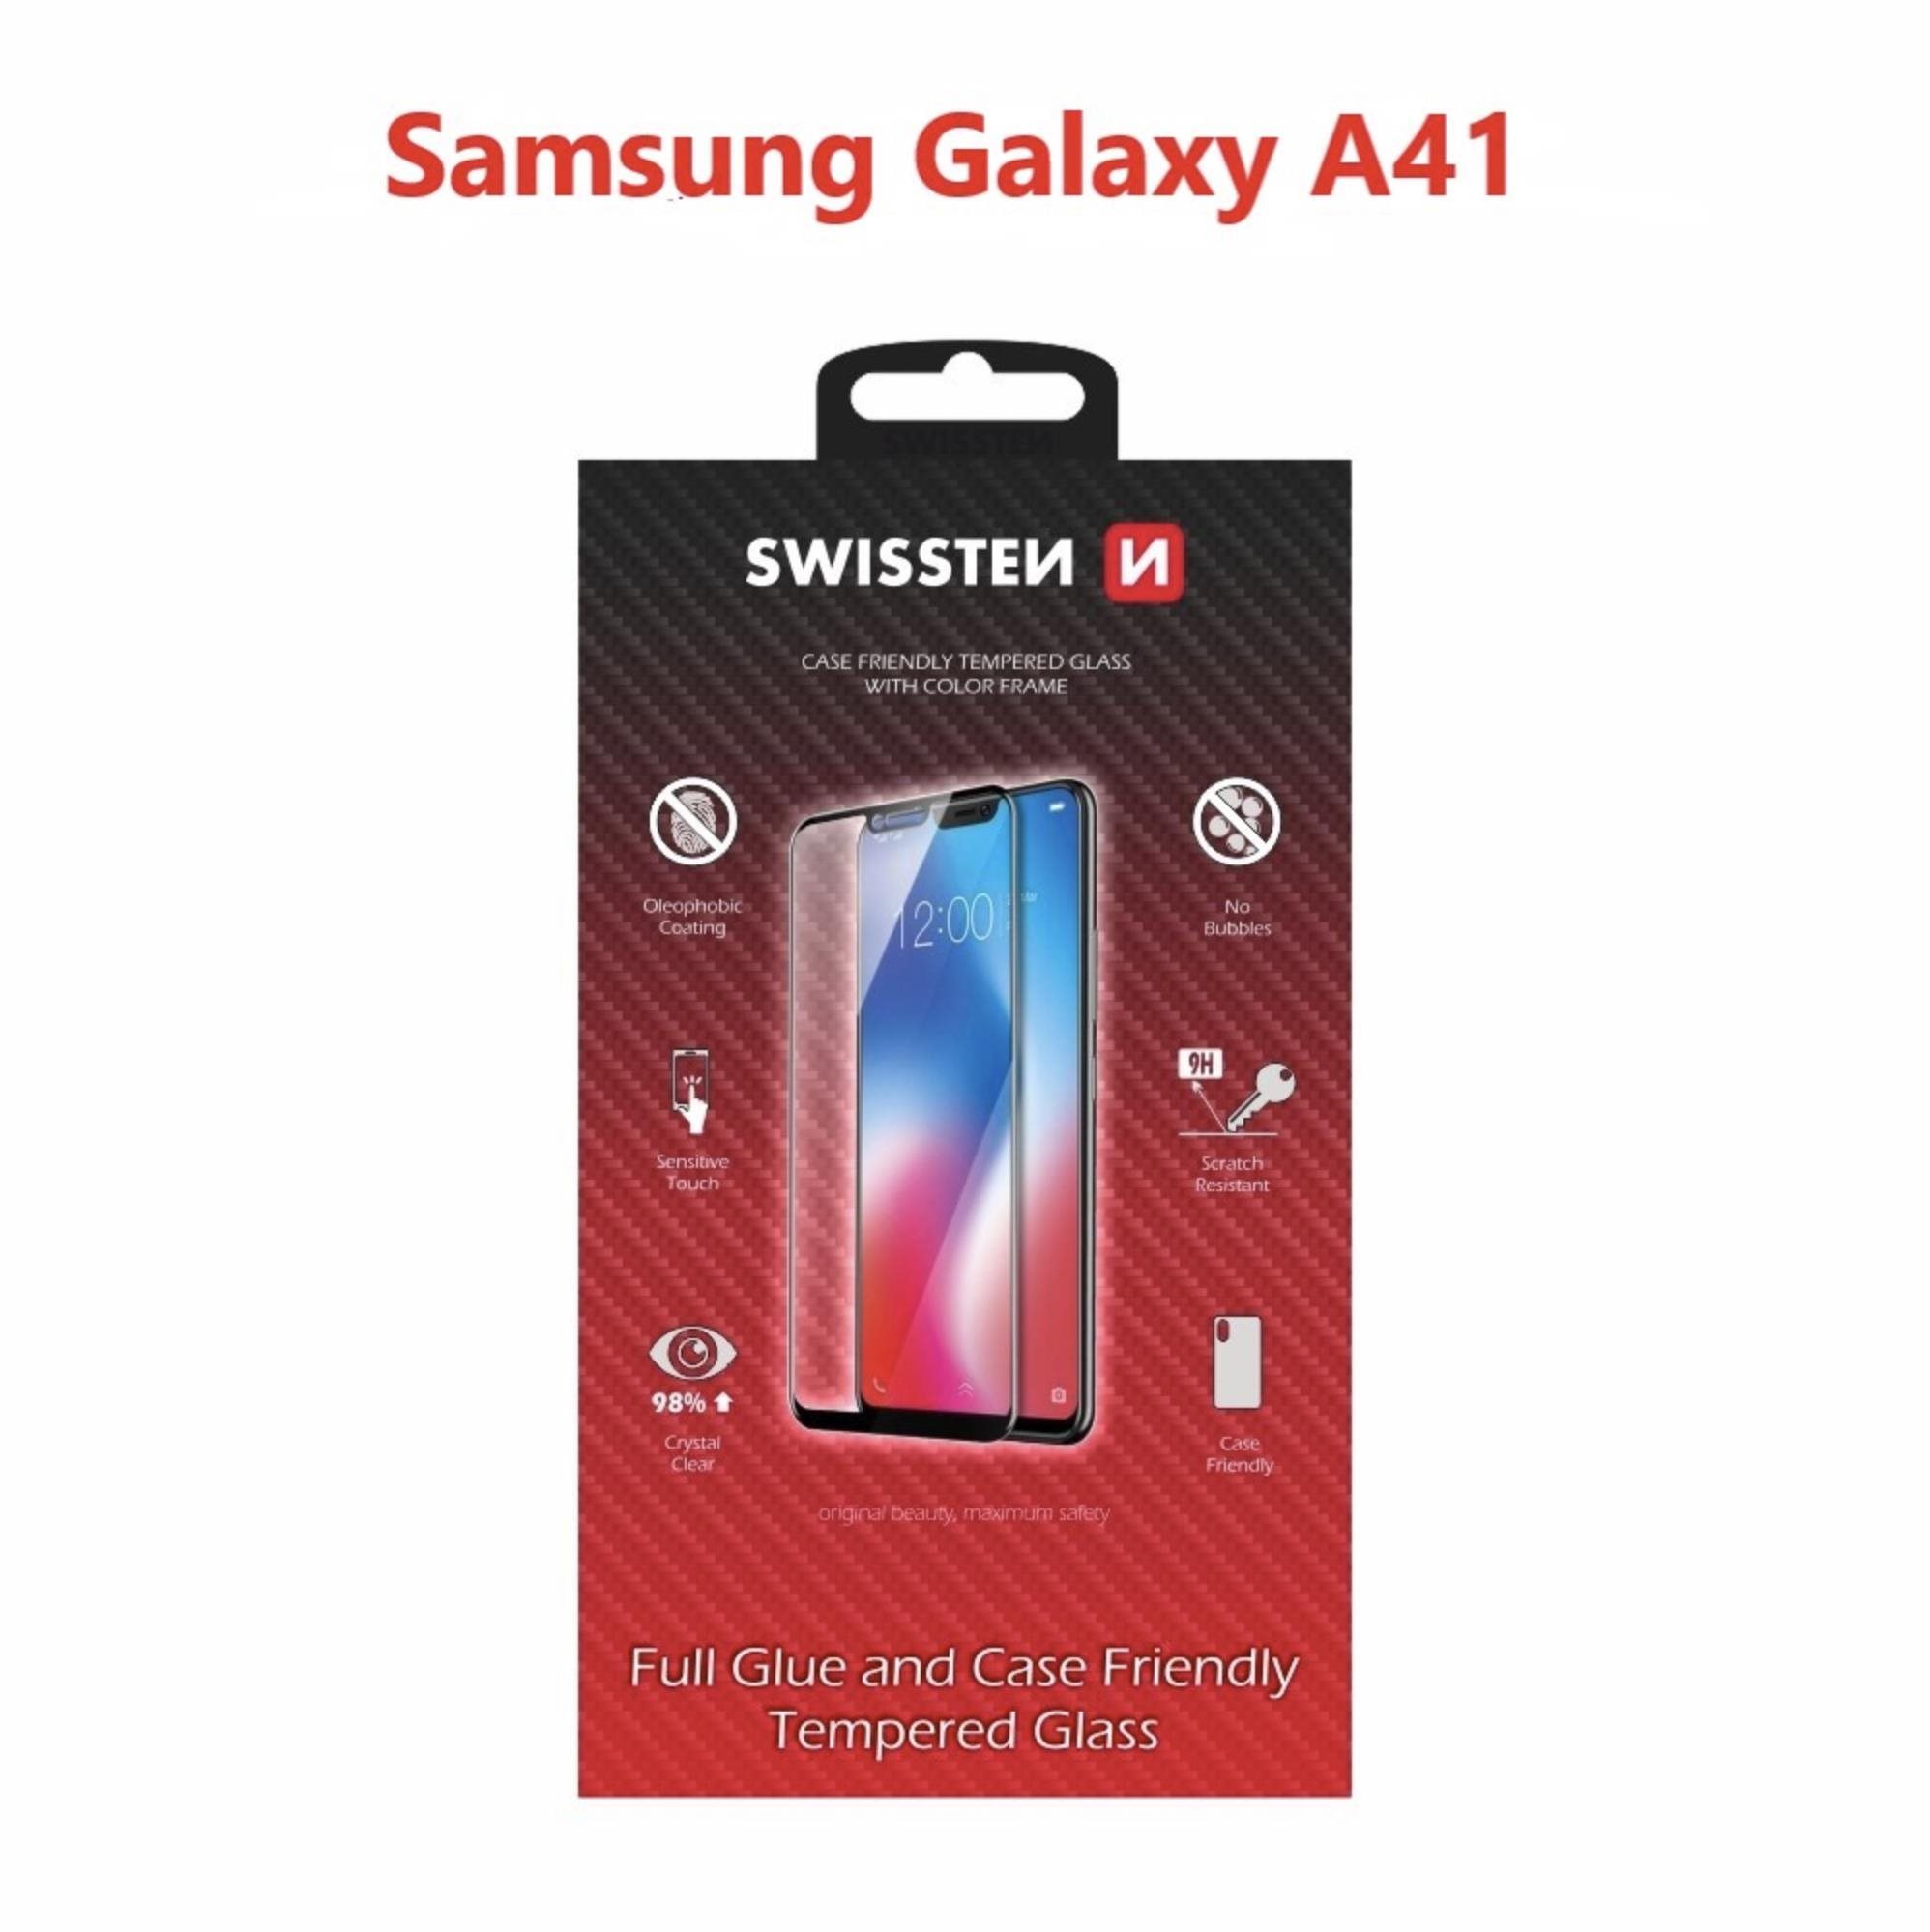 Swissten Case Friendly Samsung Galaxy A41 üvegfólia - fekete